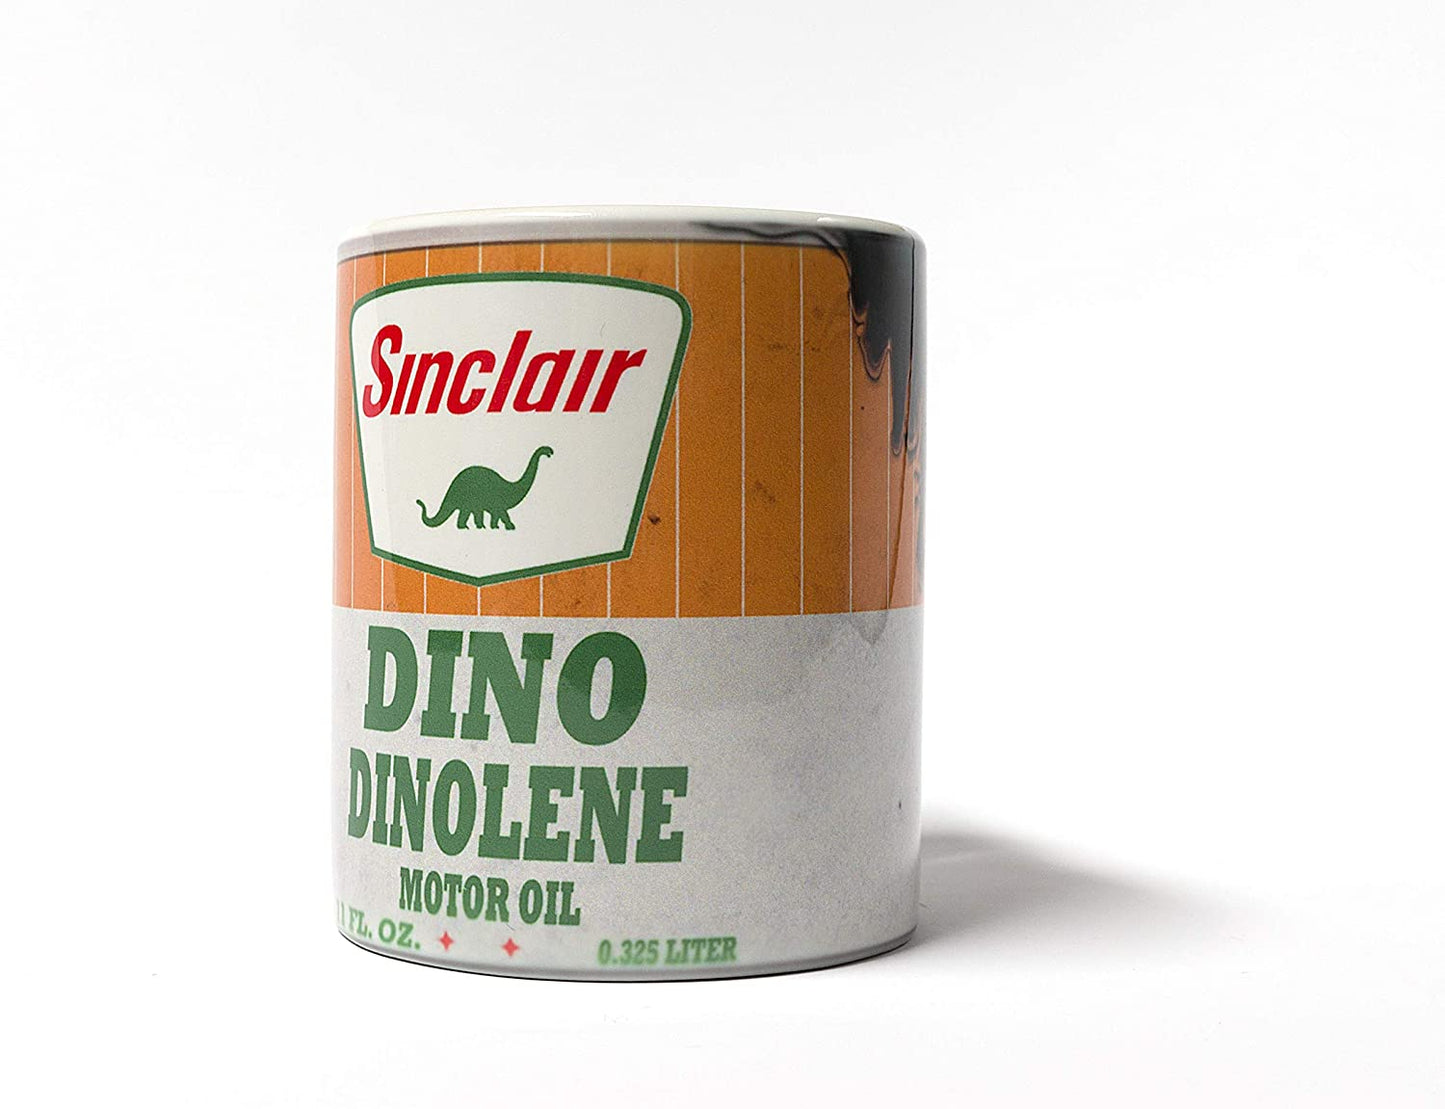 Sinclair Dino Dinolene Oil Can Mug